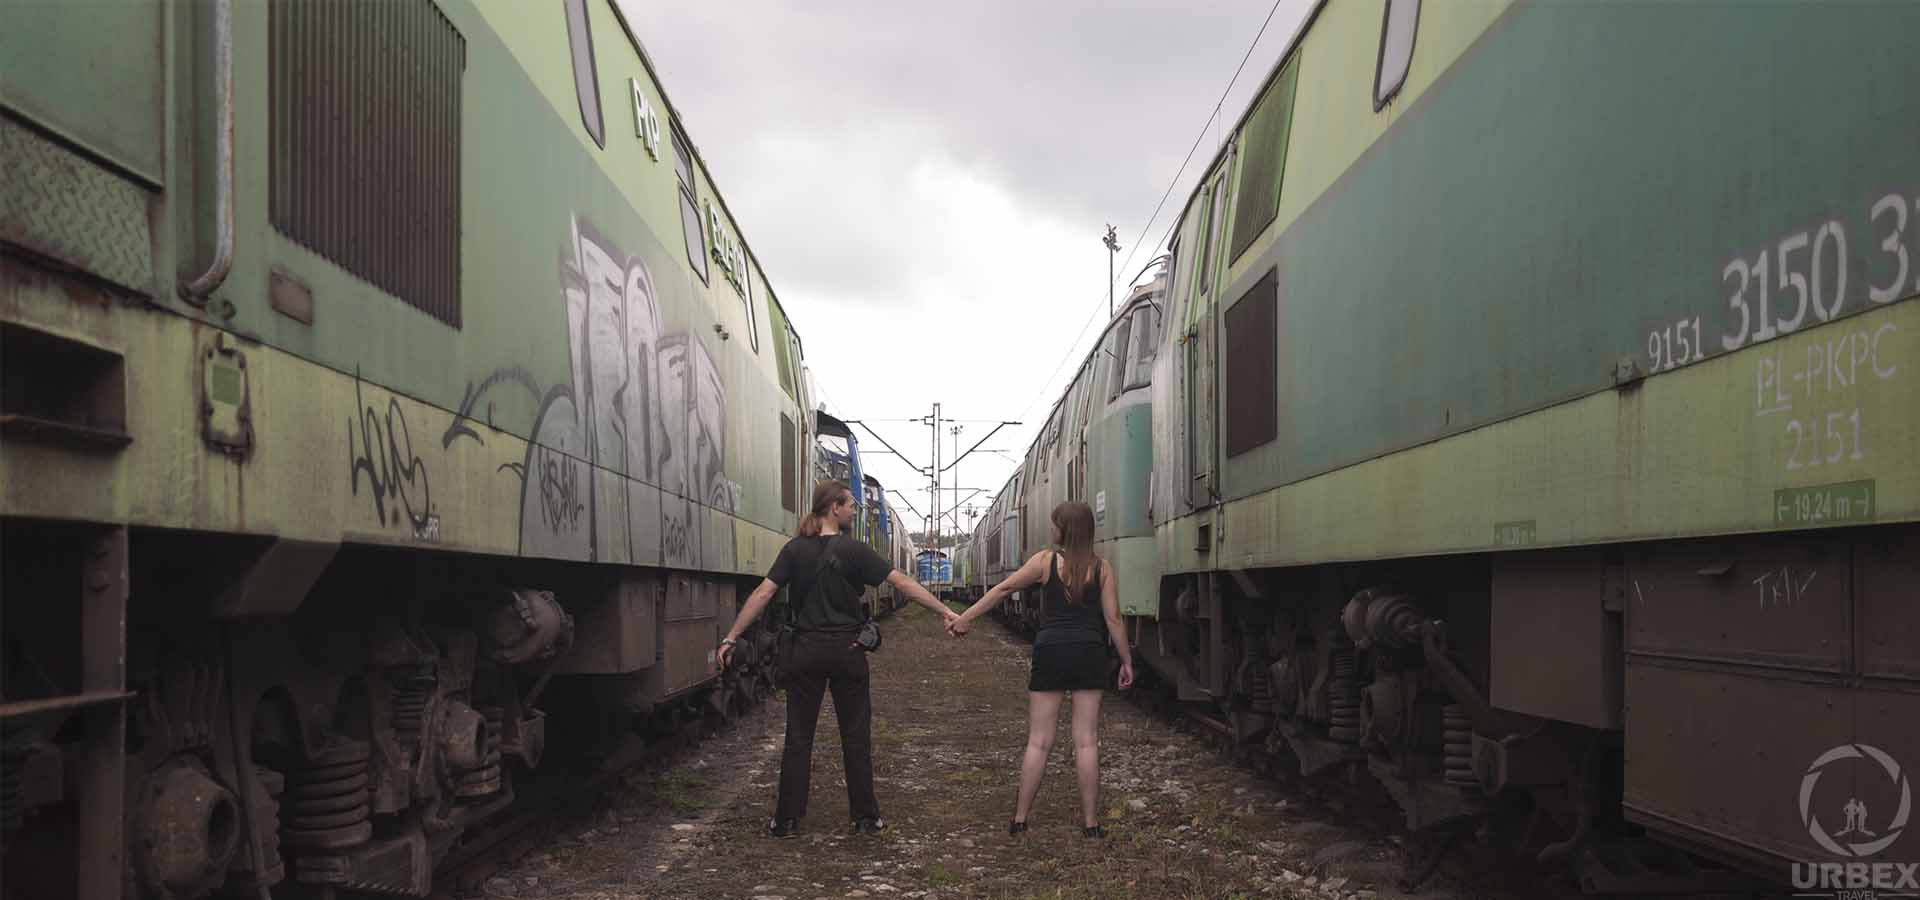 Train lovers Poland